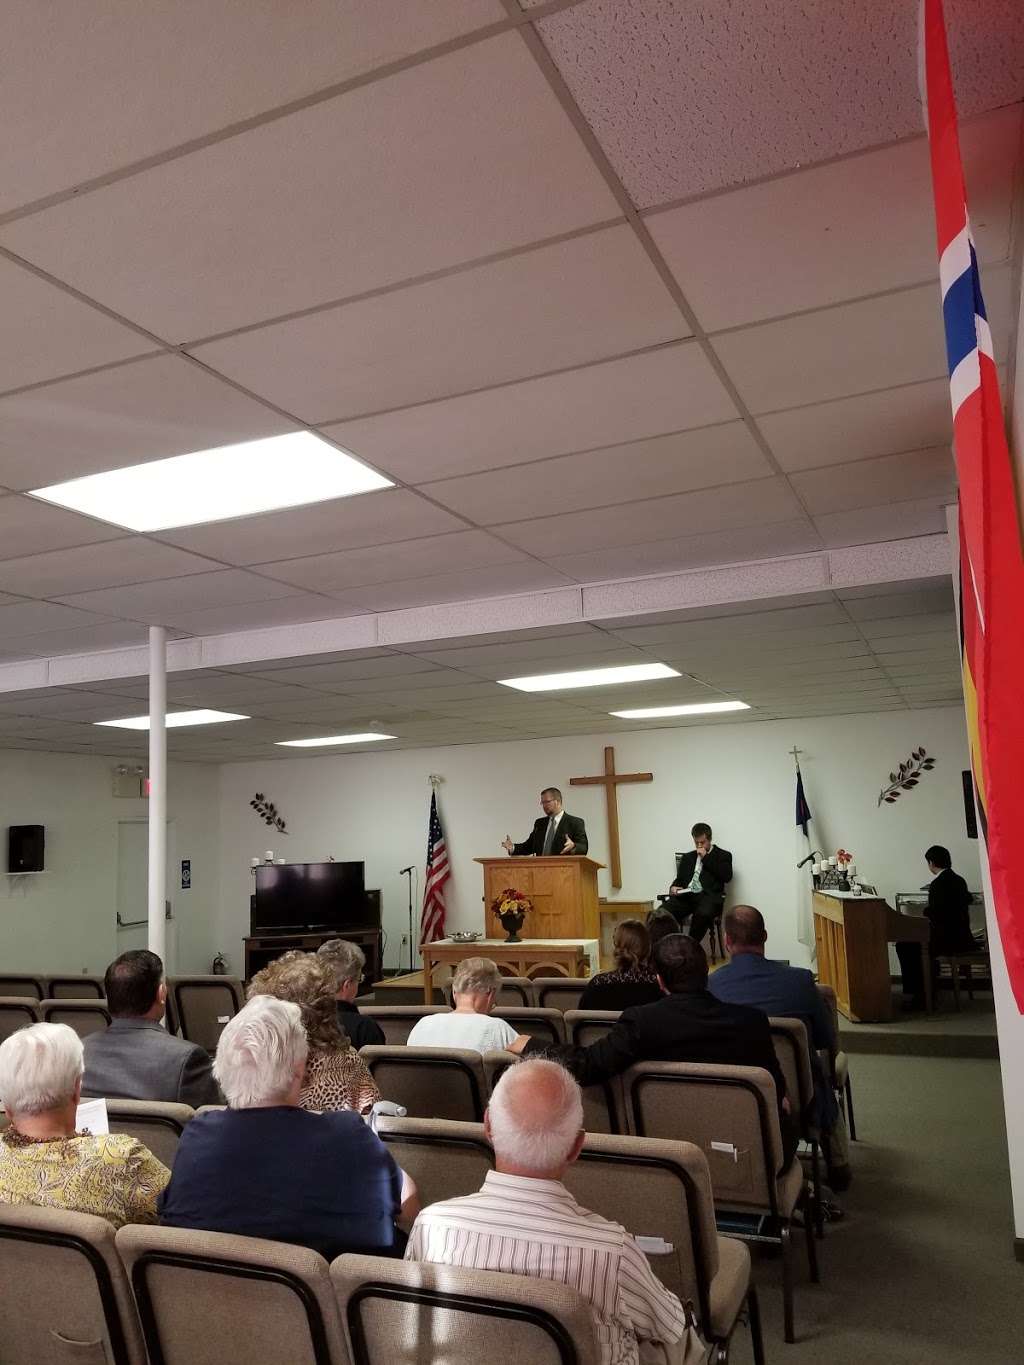 Hope Baptist Church | 2475 Lancaster Pike, Shillington, PA 19607, USA | Phone: (484) 650-3966